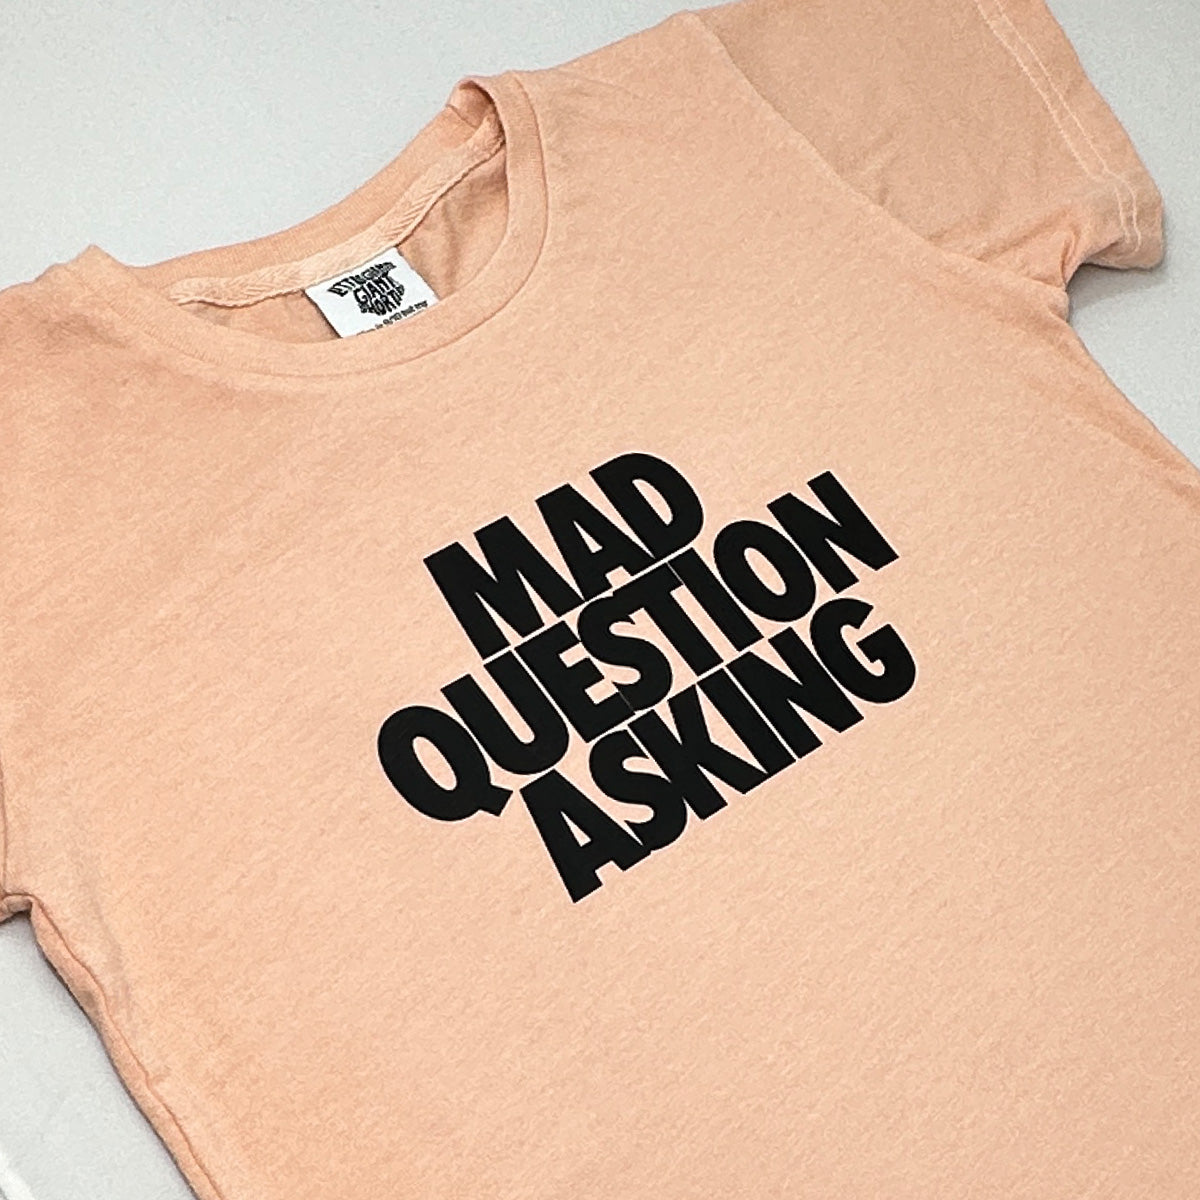 Mad Question Asking T-shirt (Mauve)